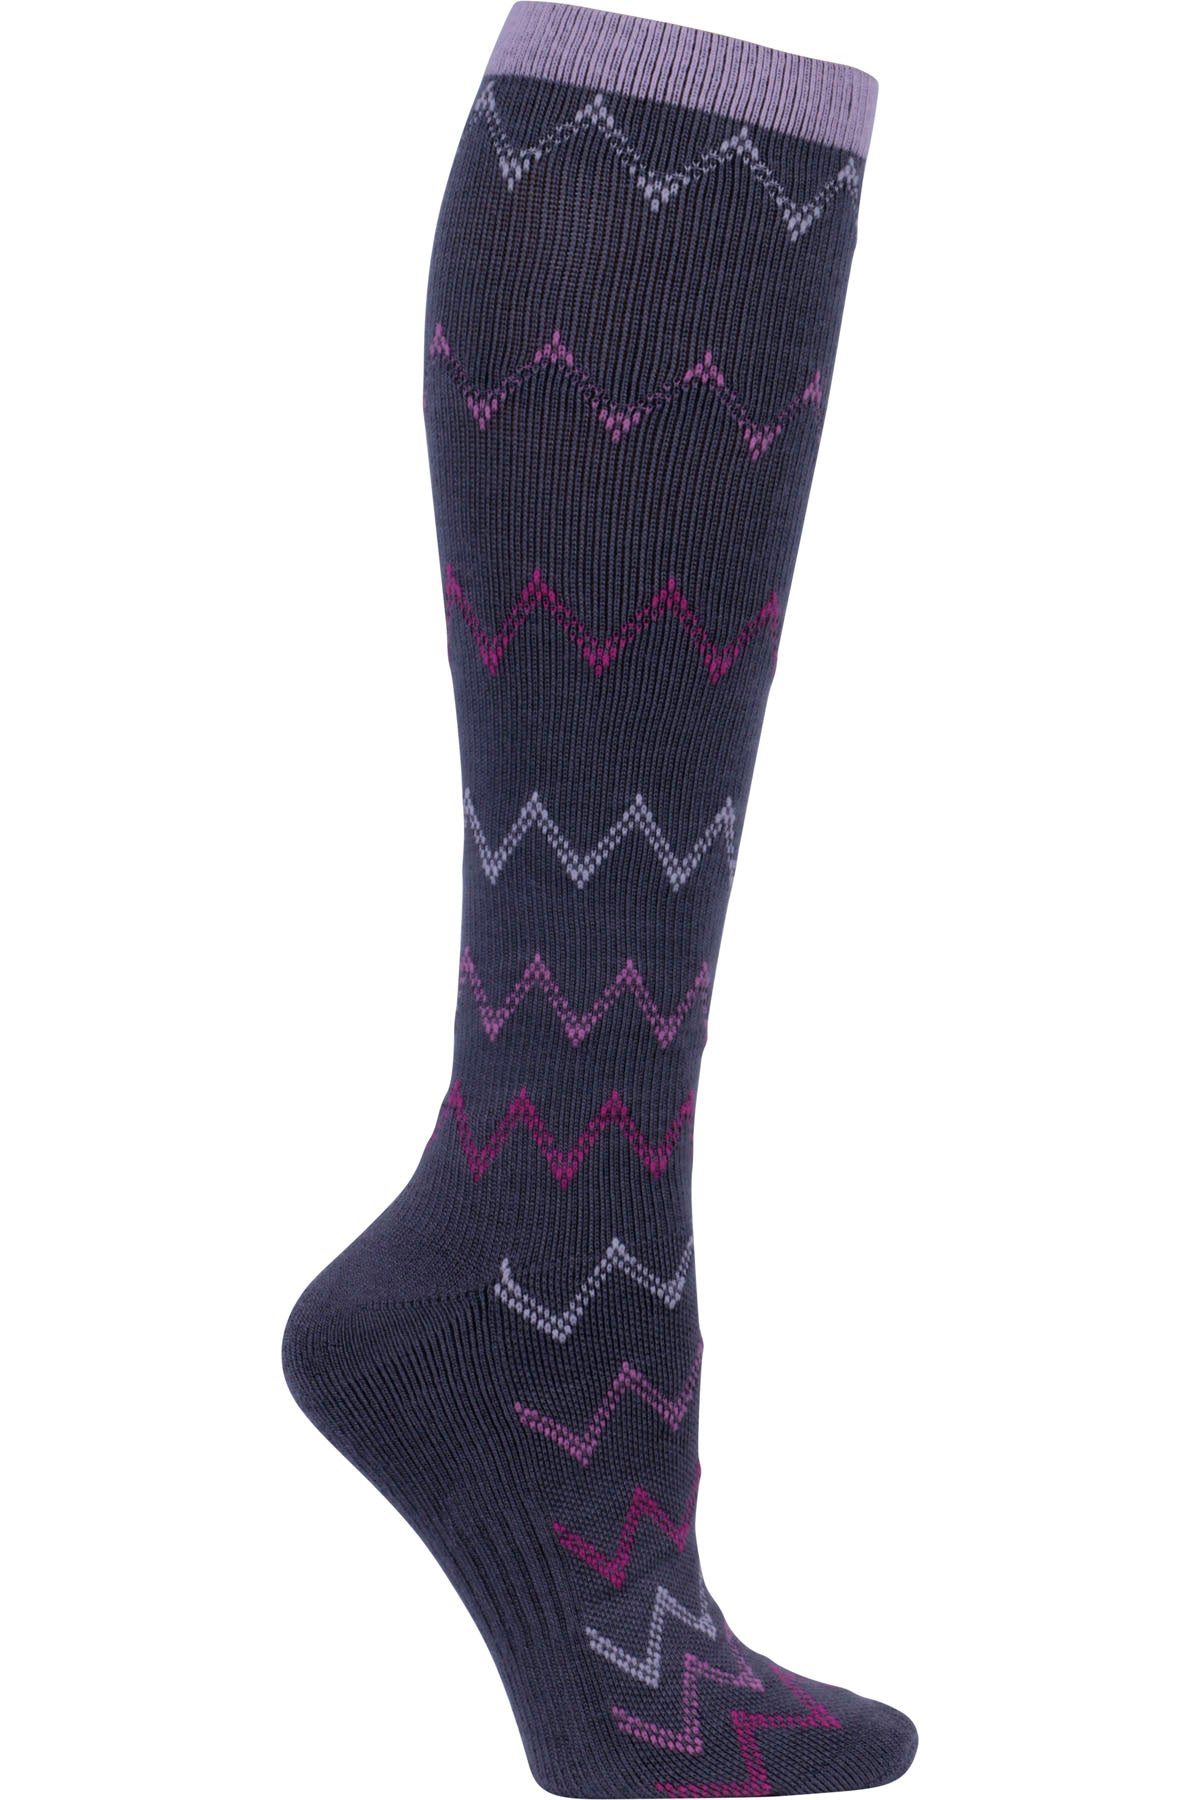 Knee High Compression Socks 15-20 mmHg Women's Compression Socks Cherokee Legwear Calm S/M 